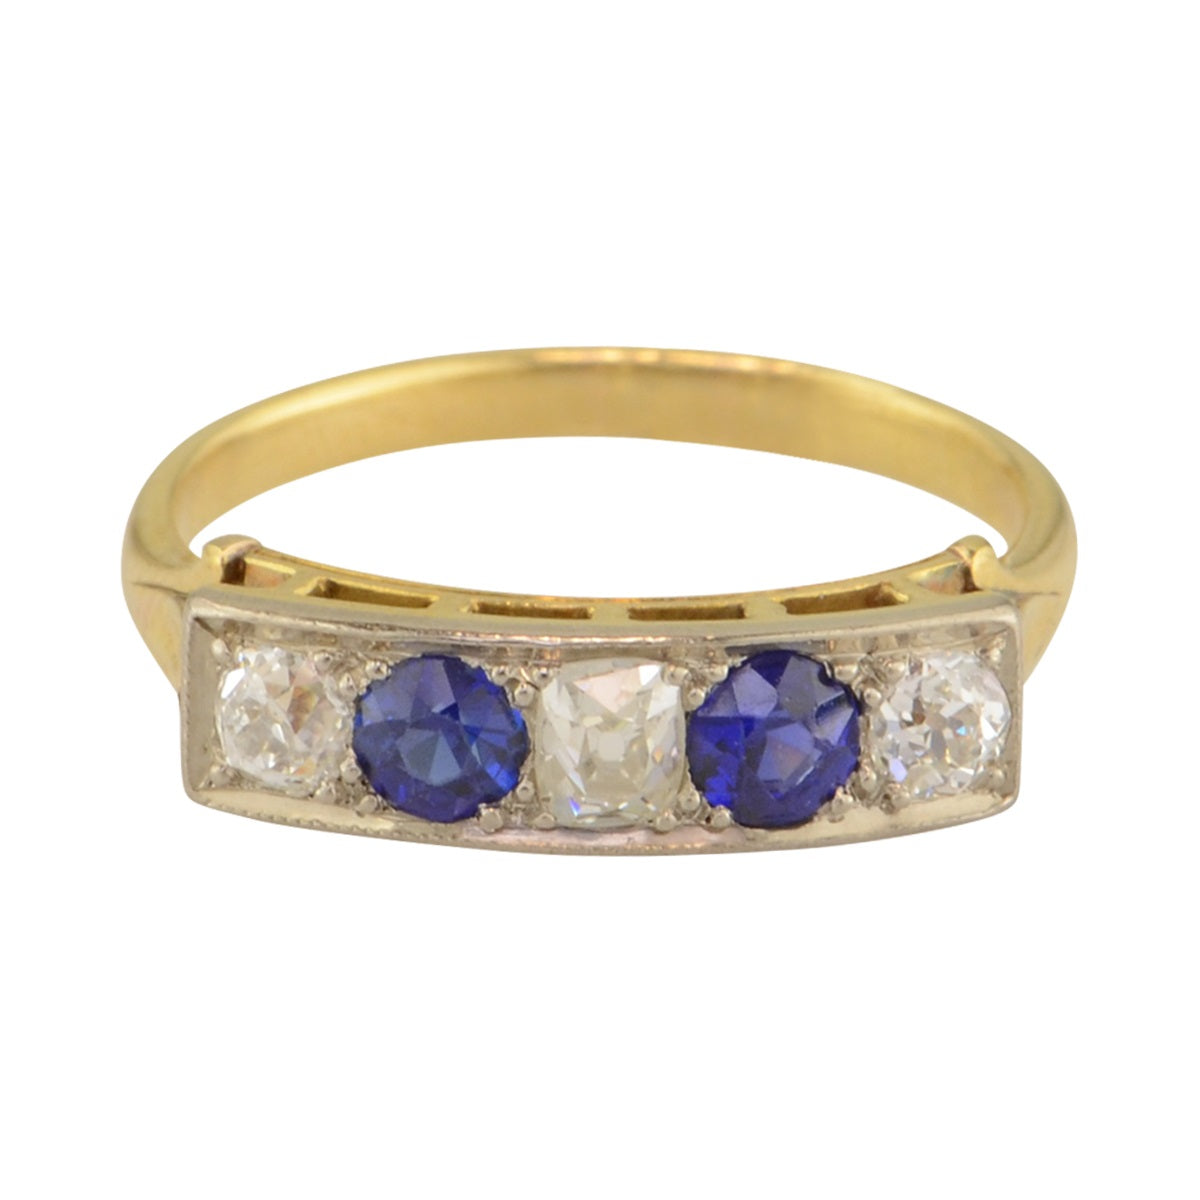 'Austin' Art Deco 5 Stone Ring with Diamond and Sapphire.